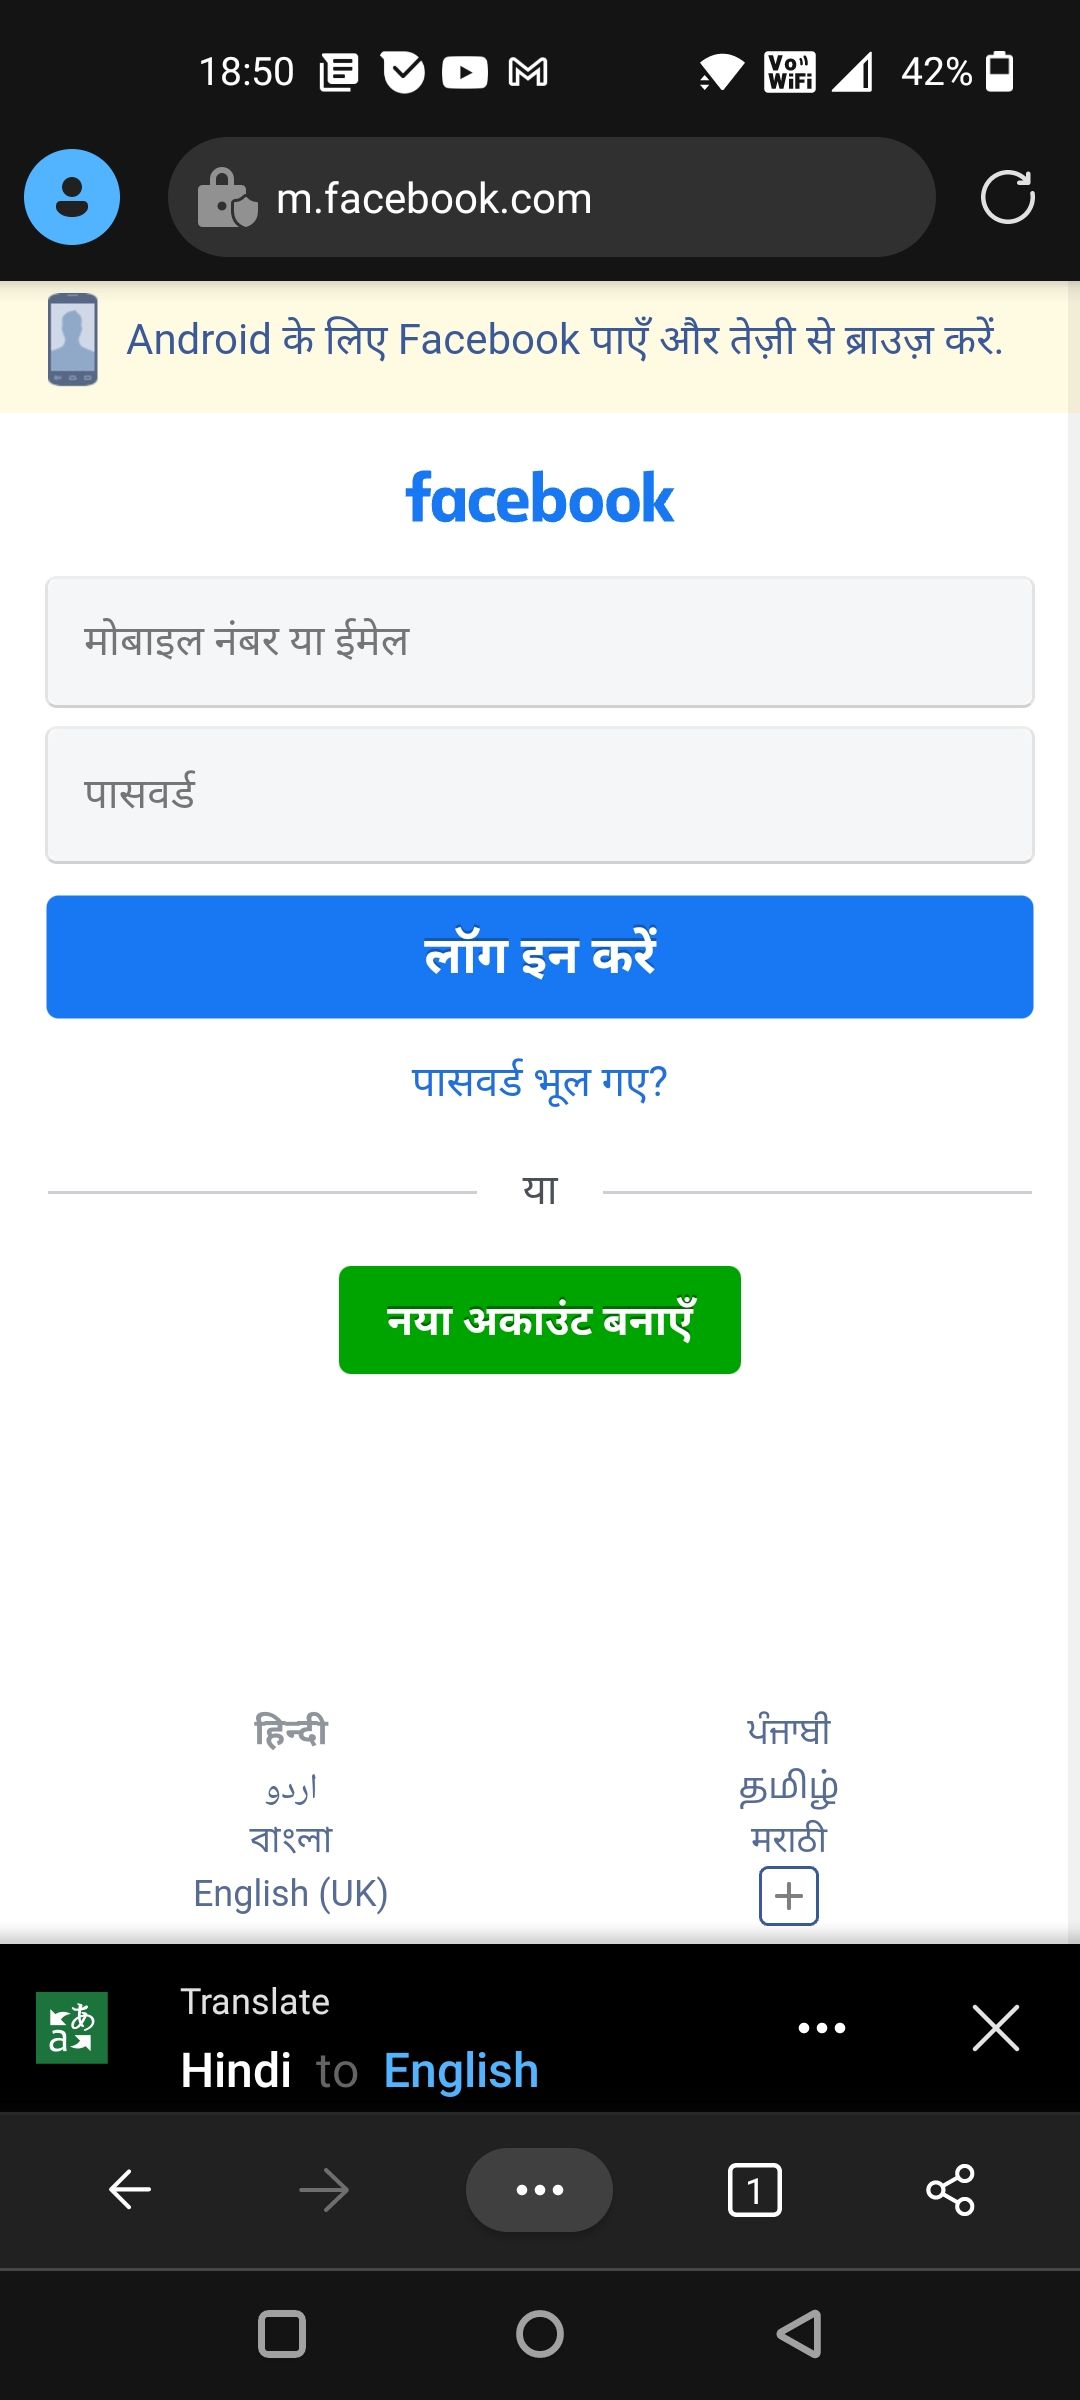 2.Facebook-Login-Page-in-Hindi